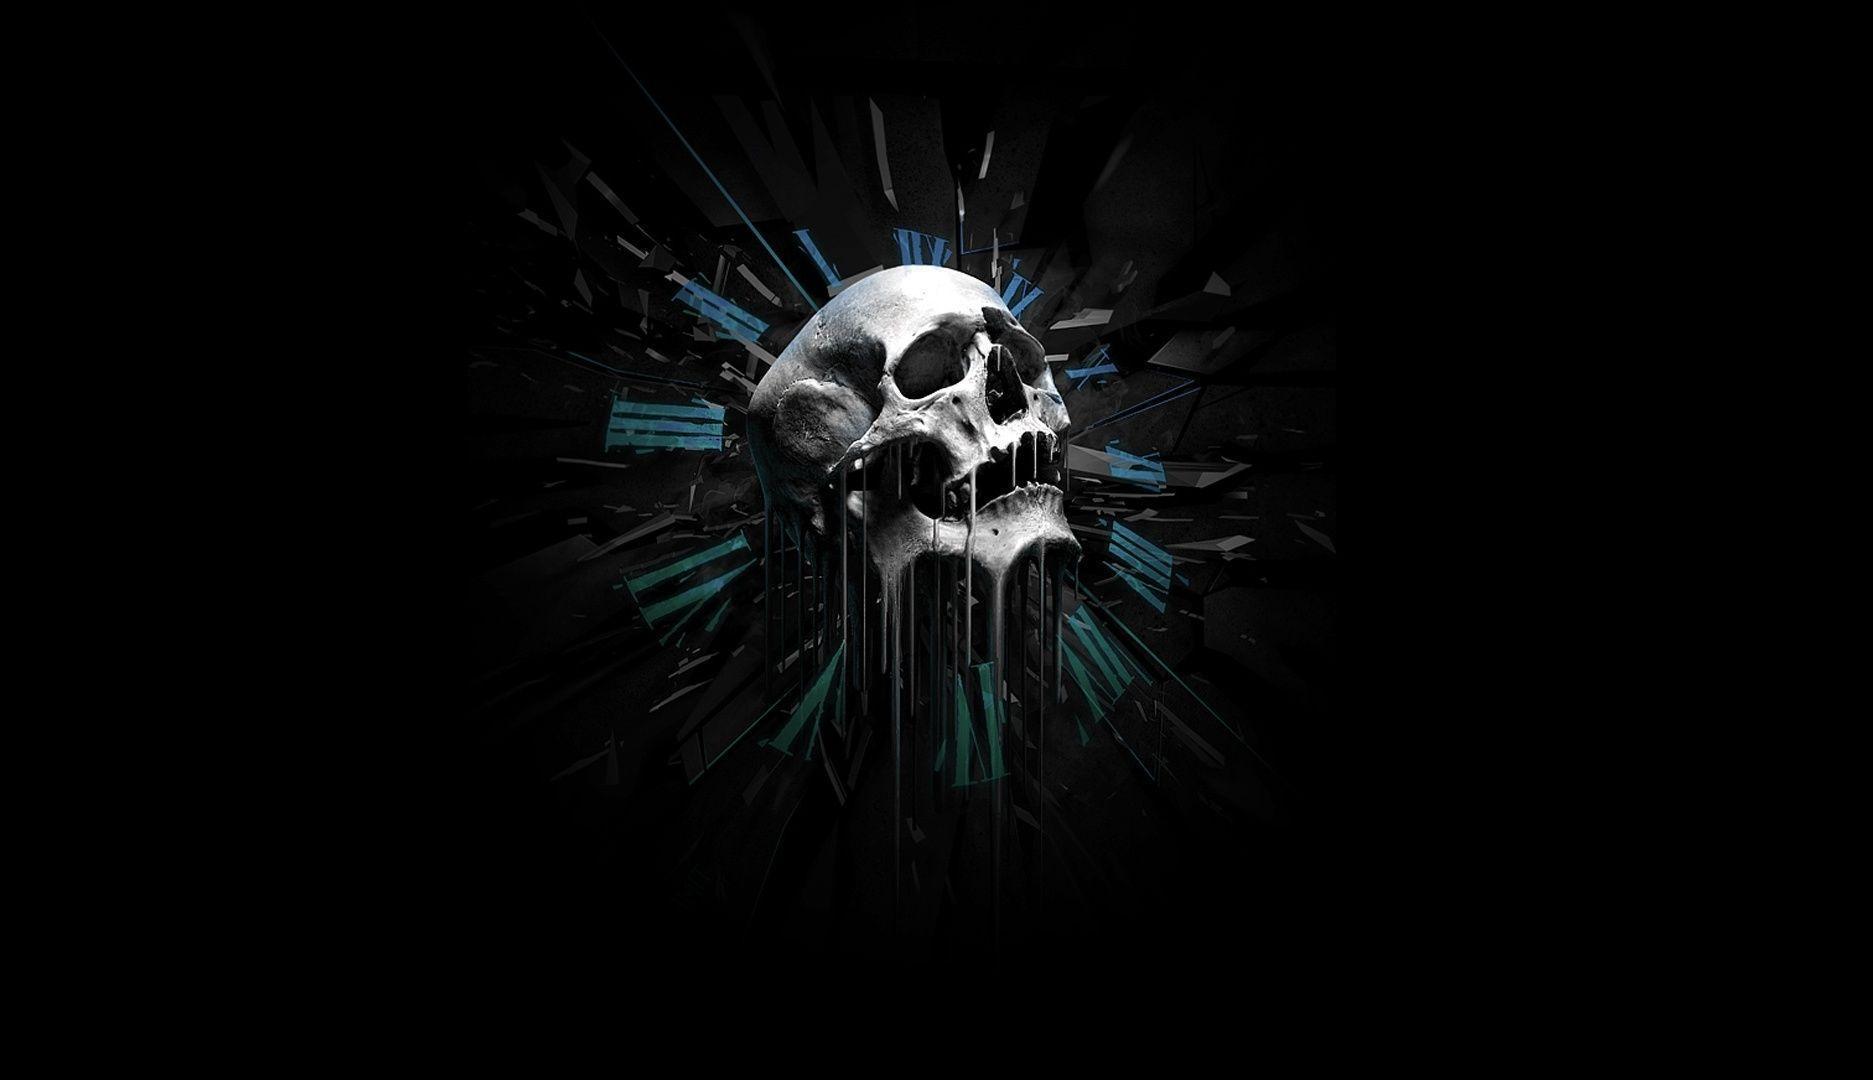 3D Skull Against Black BaAckground Free and Wallpaper